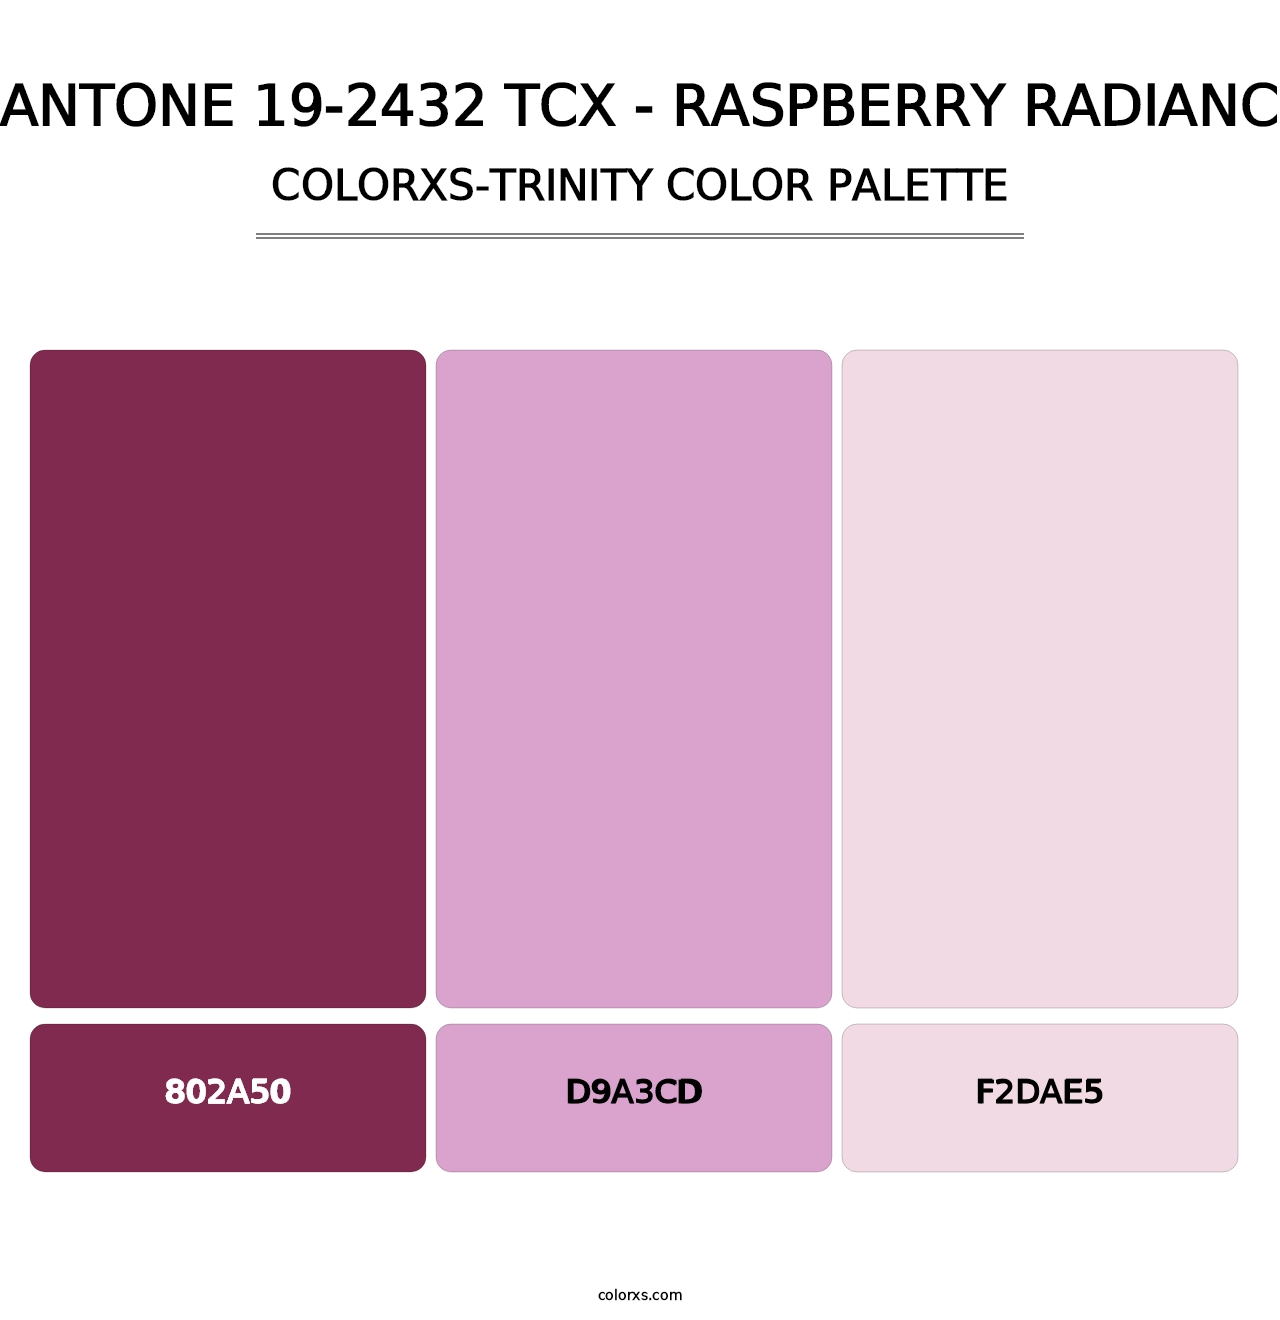 PANTONE 19-2432 TCX - Raspberry Radiance - Colorxs Trinity Palette